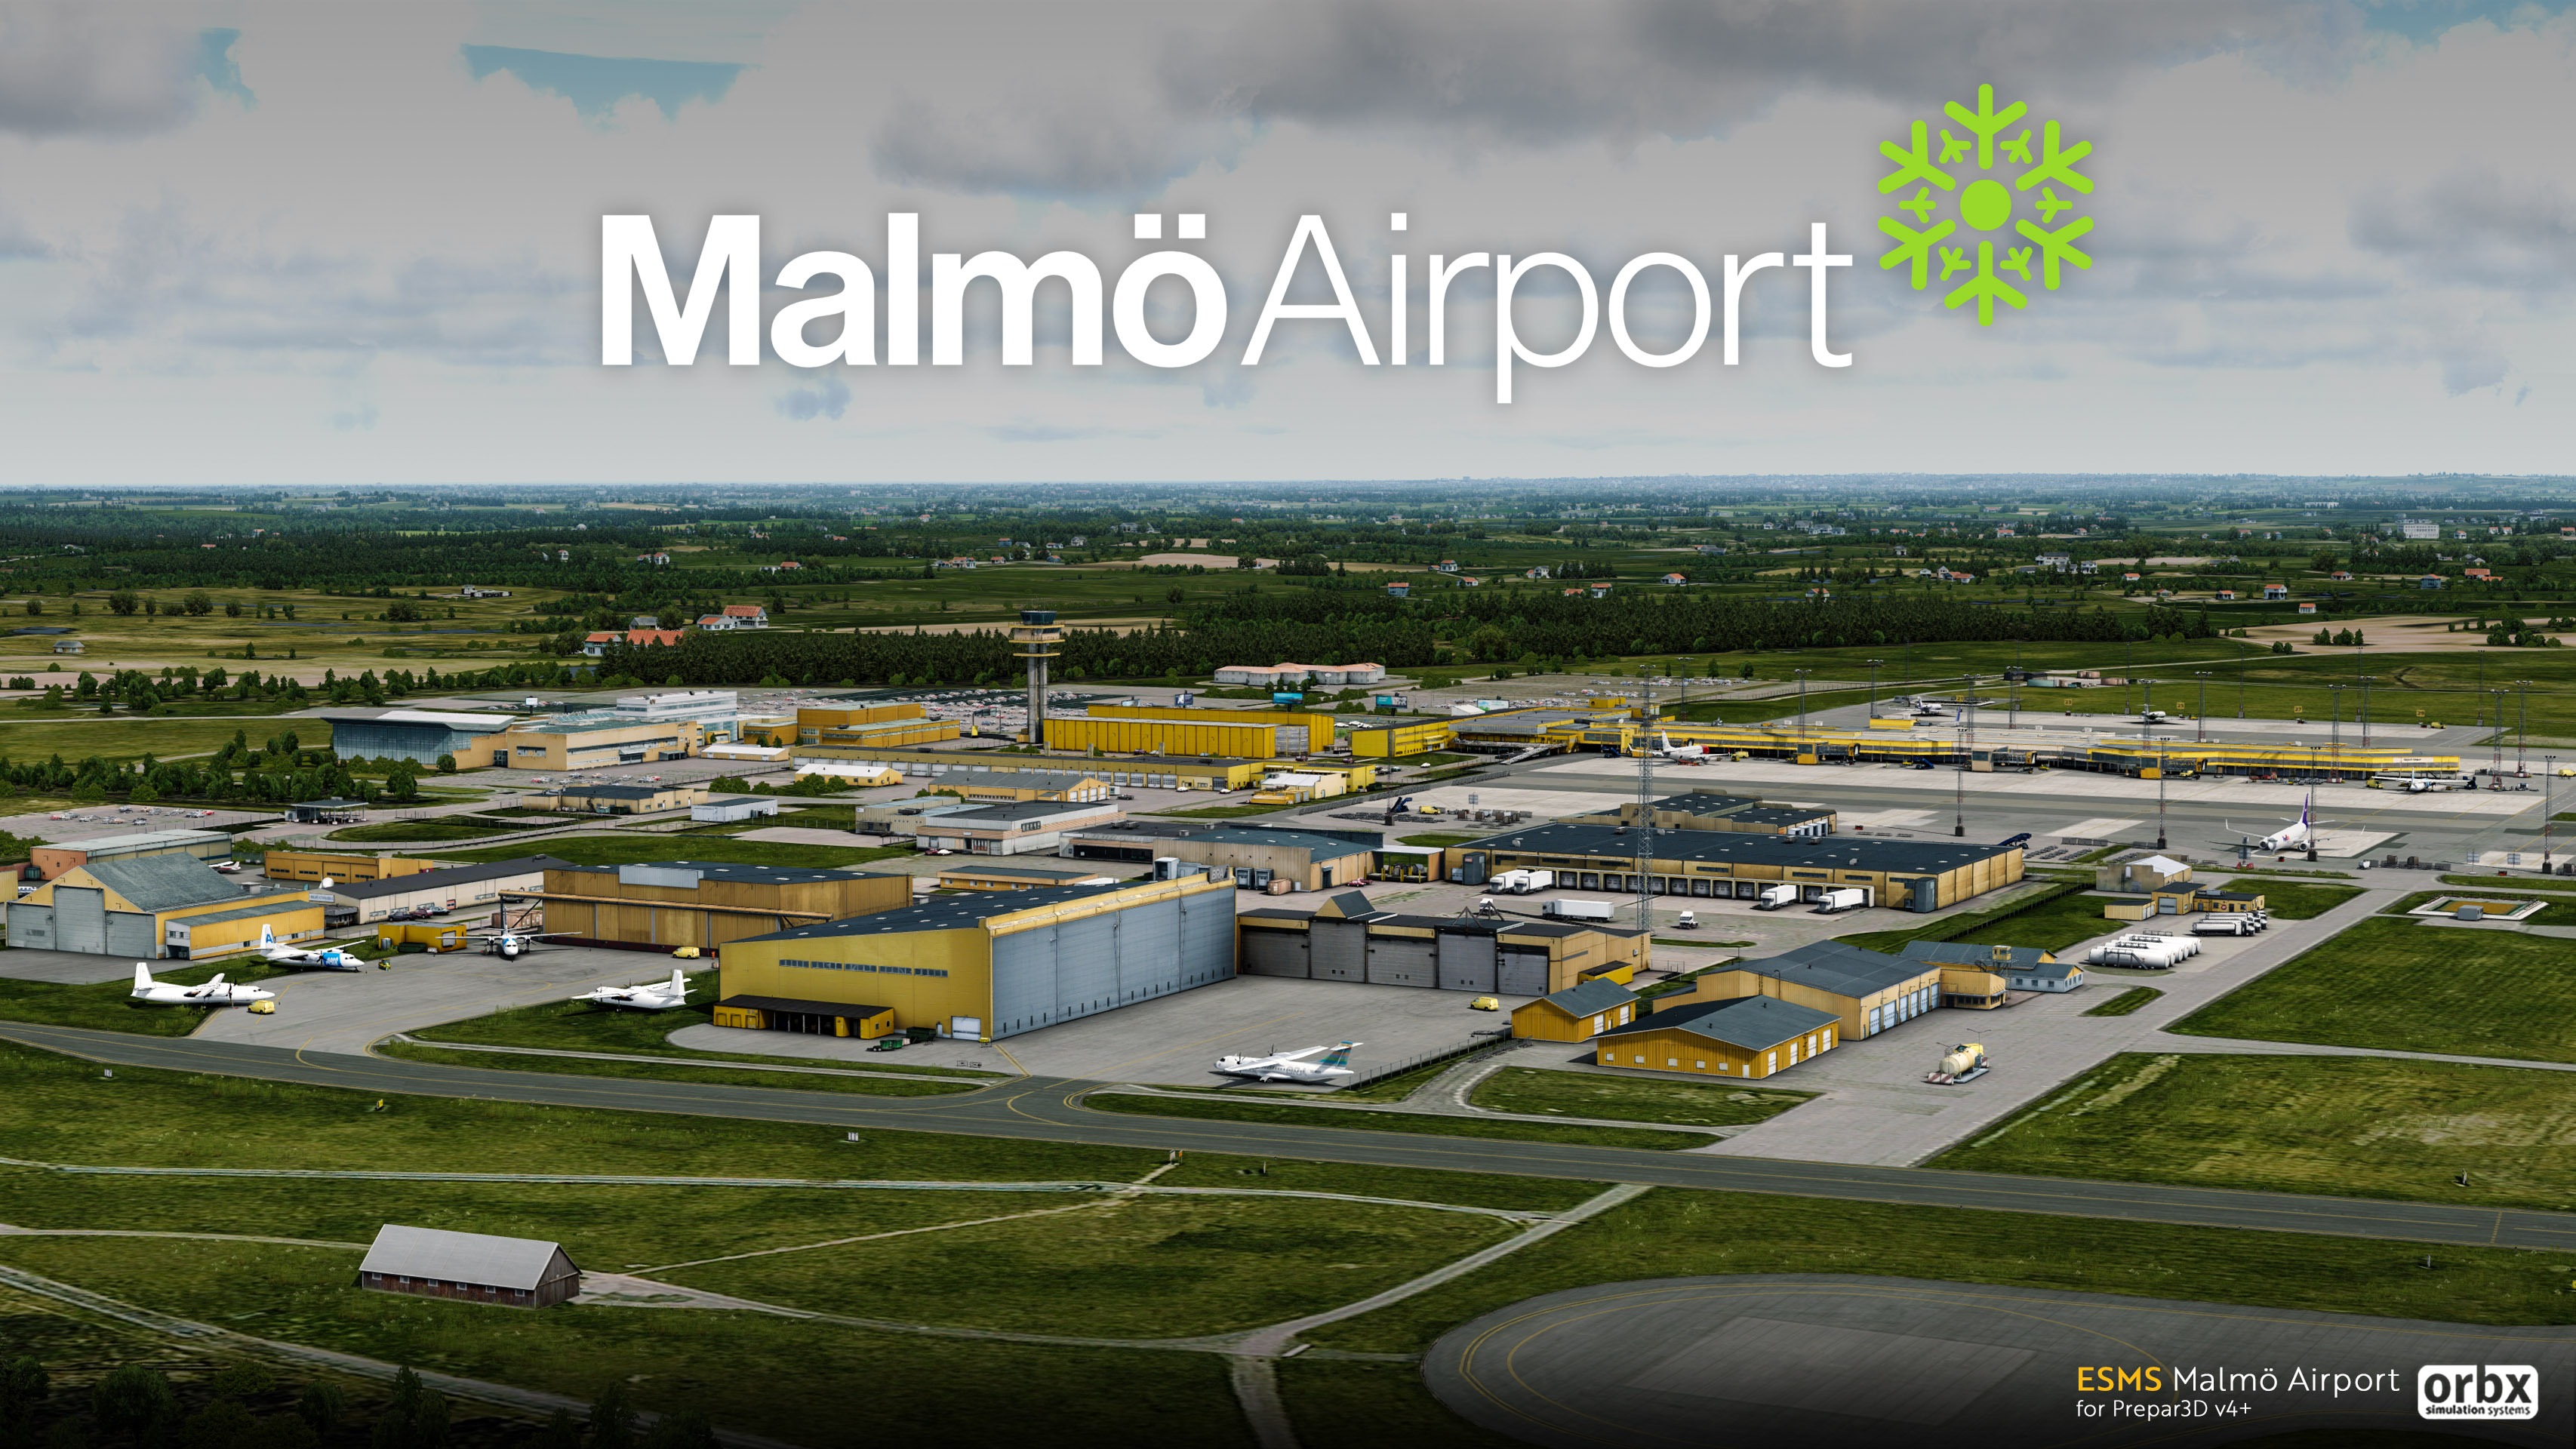 Orbx Announces Malmö Airport for P3D